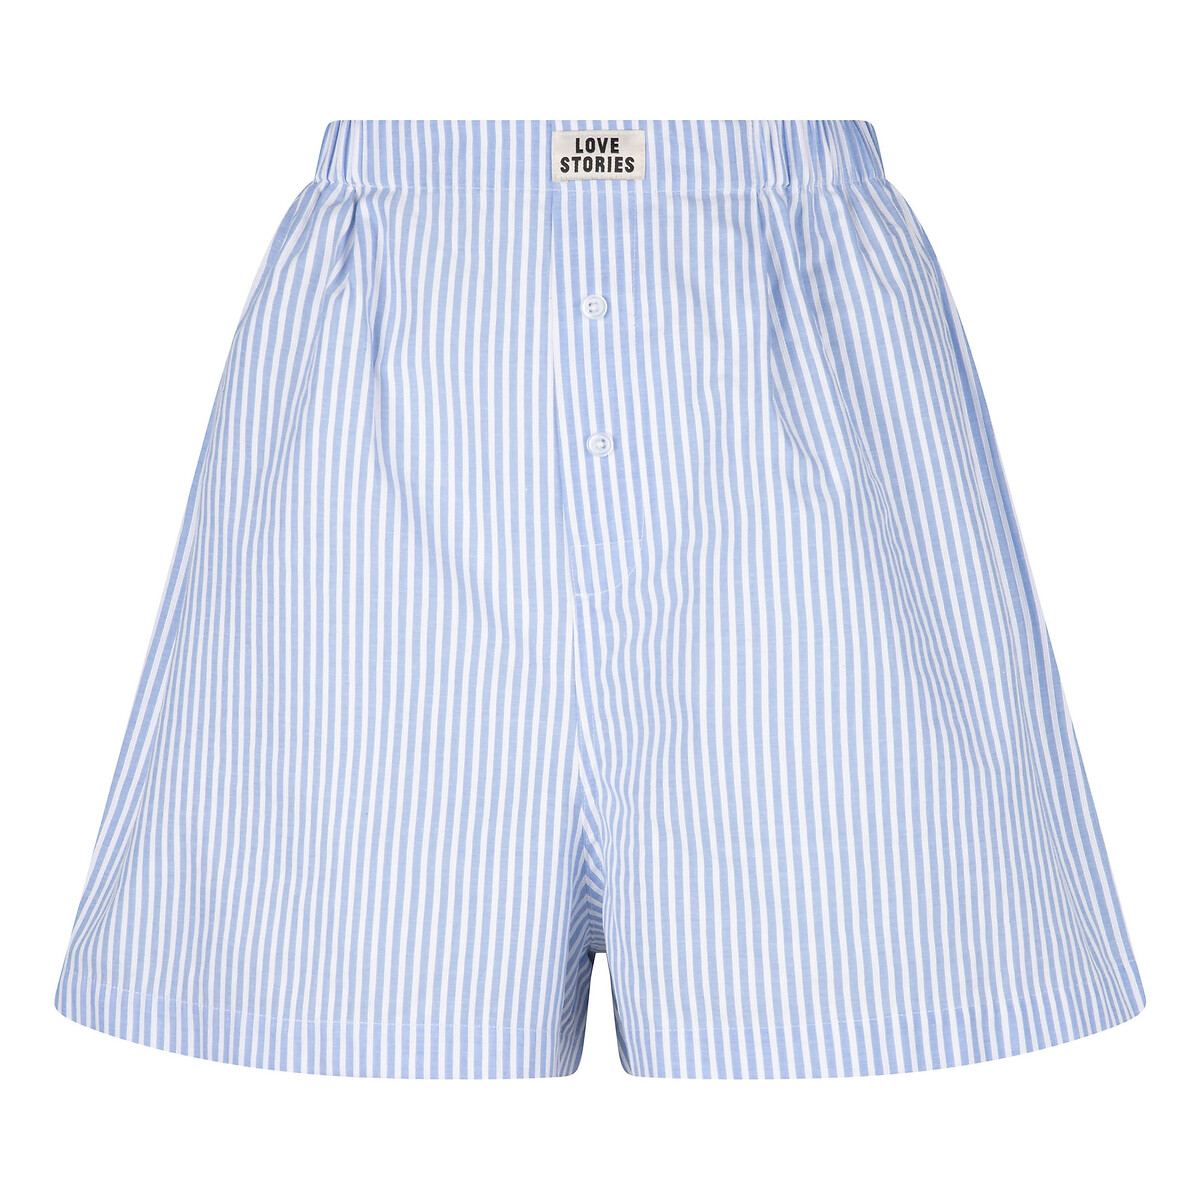 Sylvester Cotton Pyjama Shorts in Striped Print